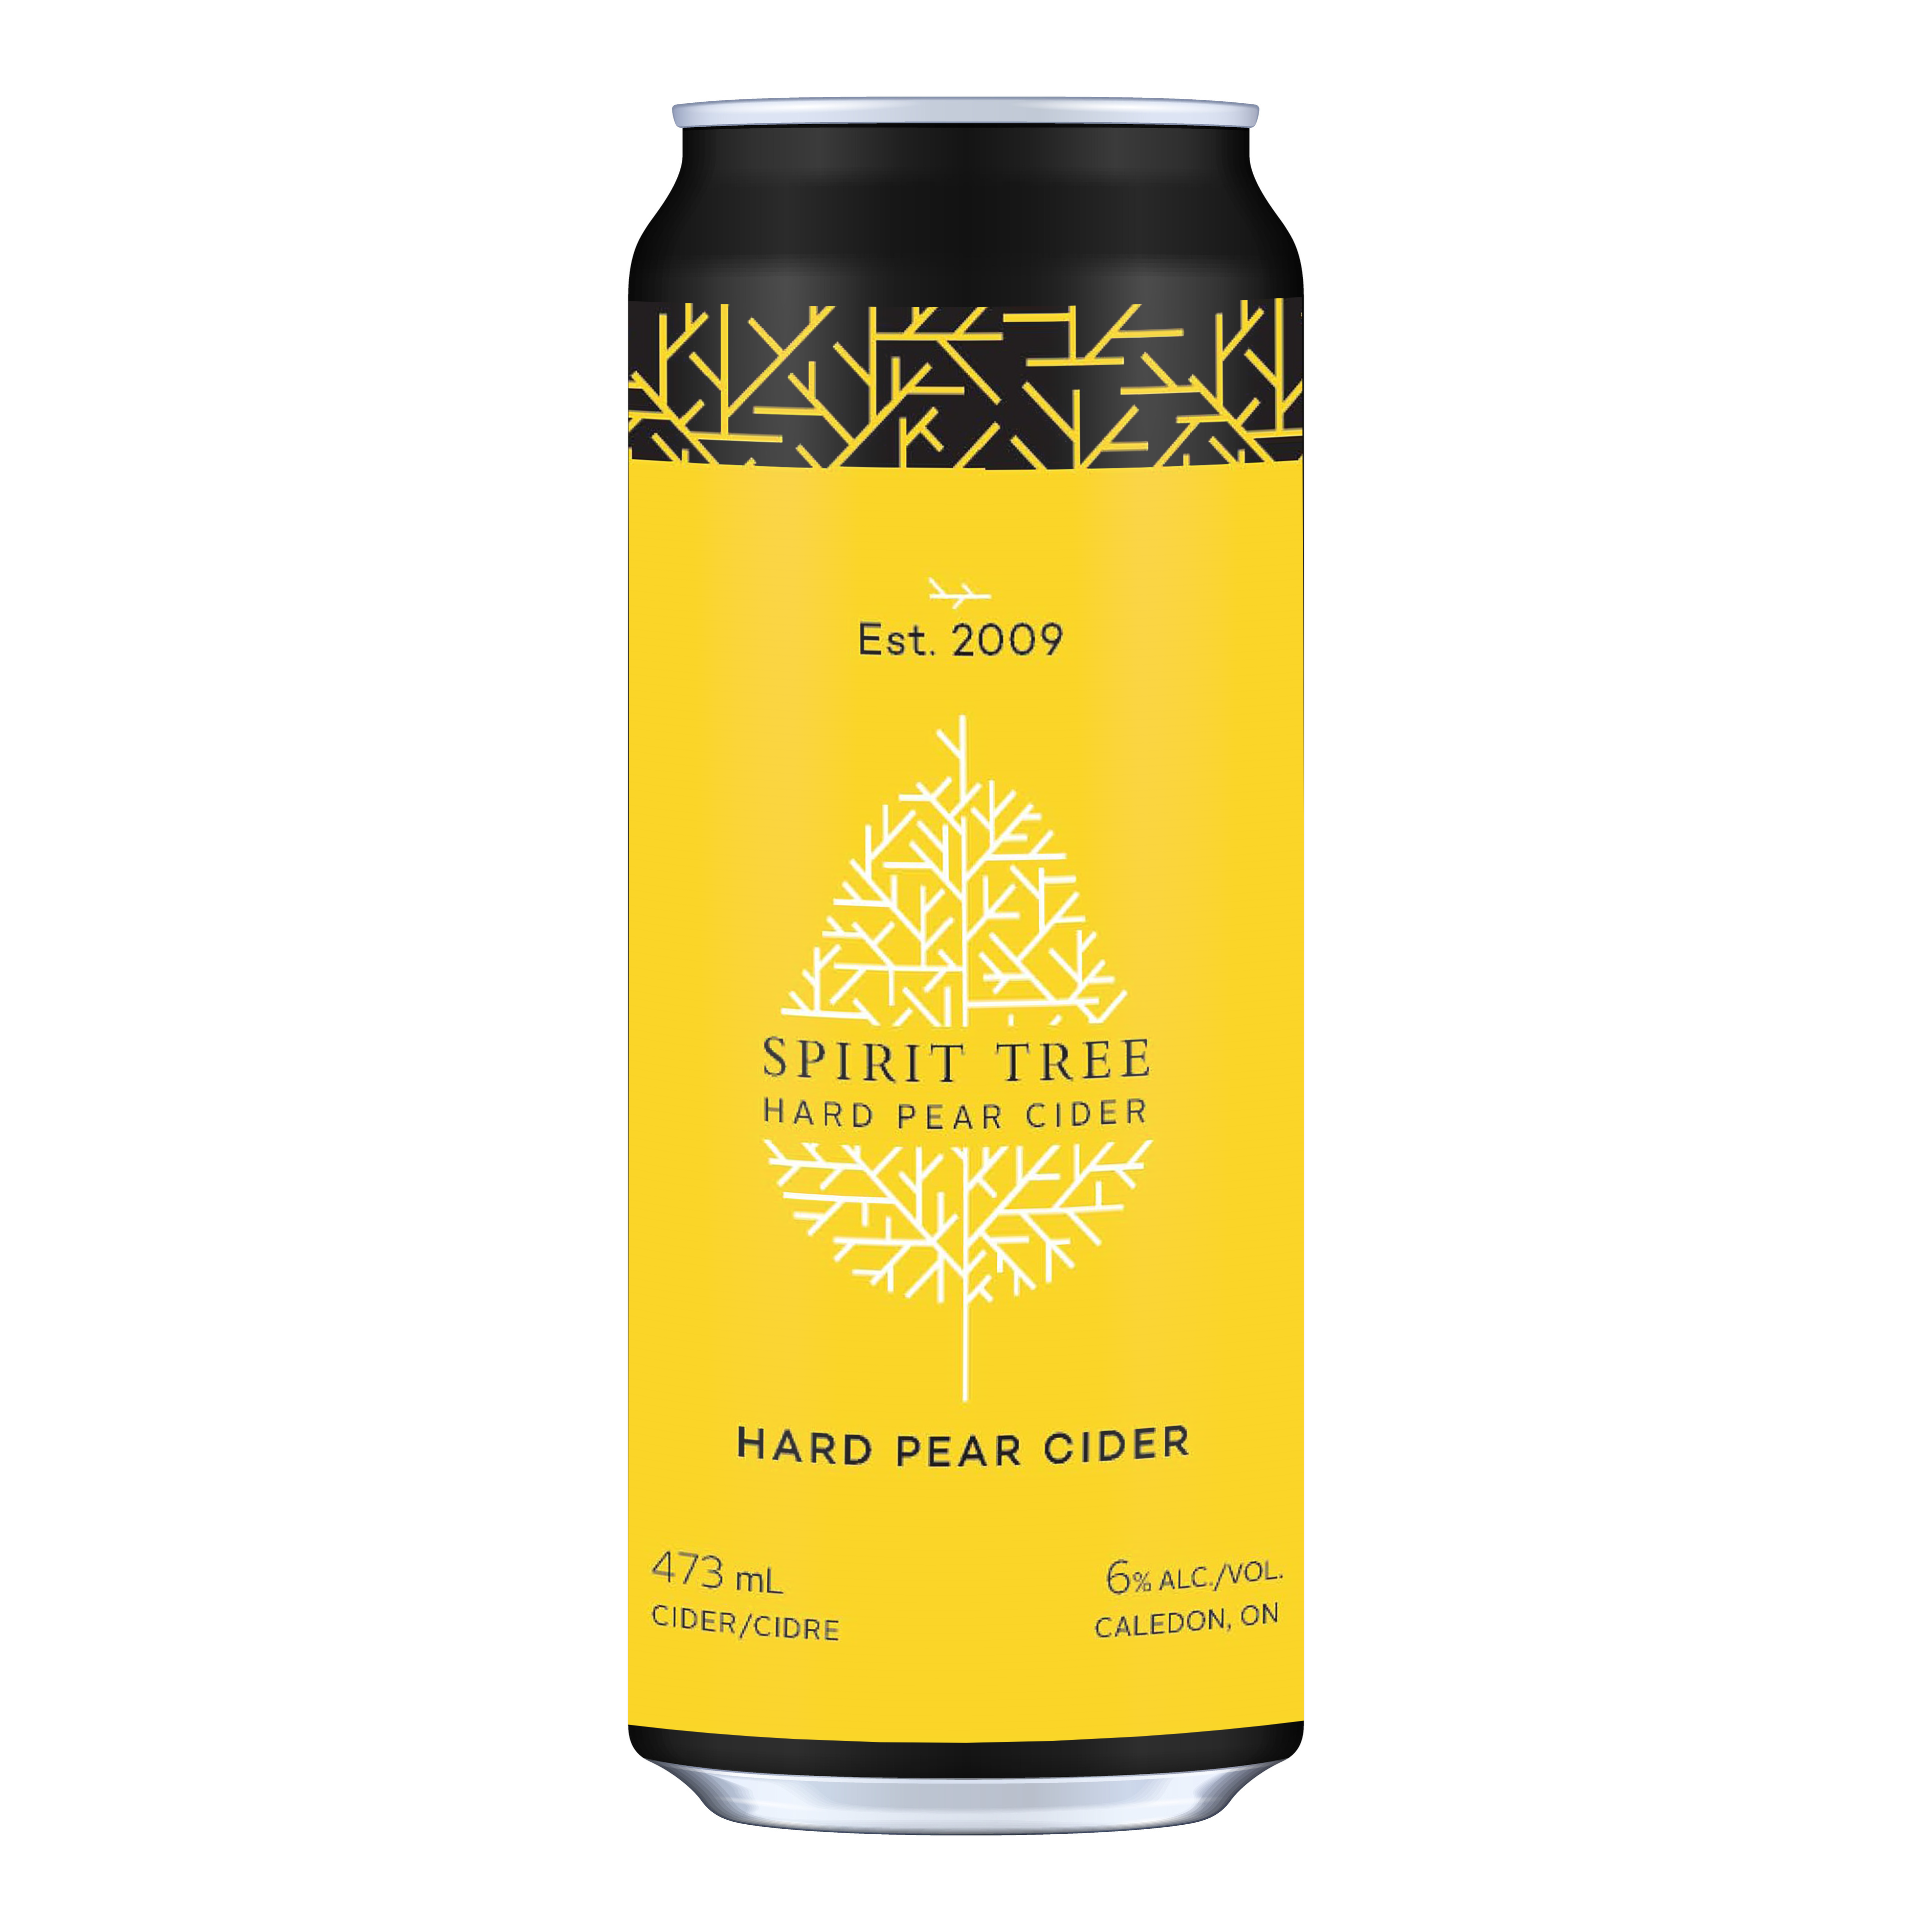 Spirit Tree's Pear Cider